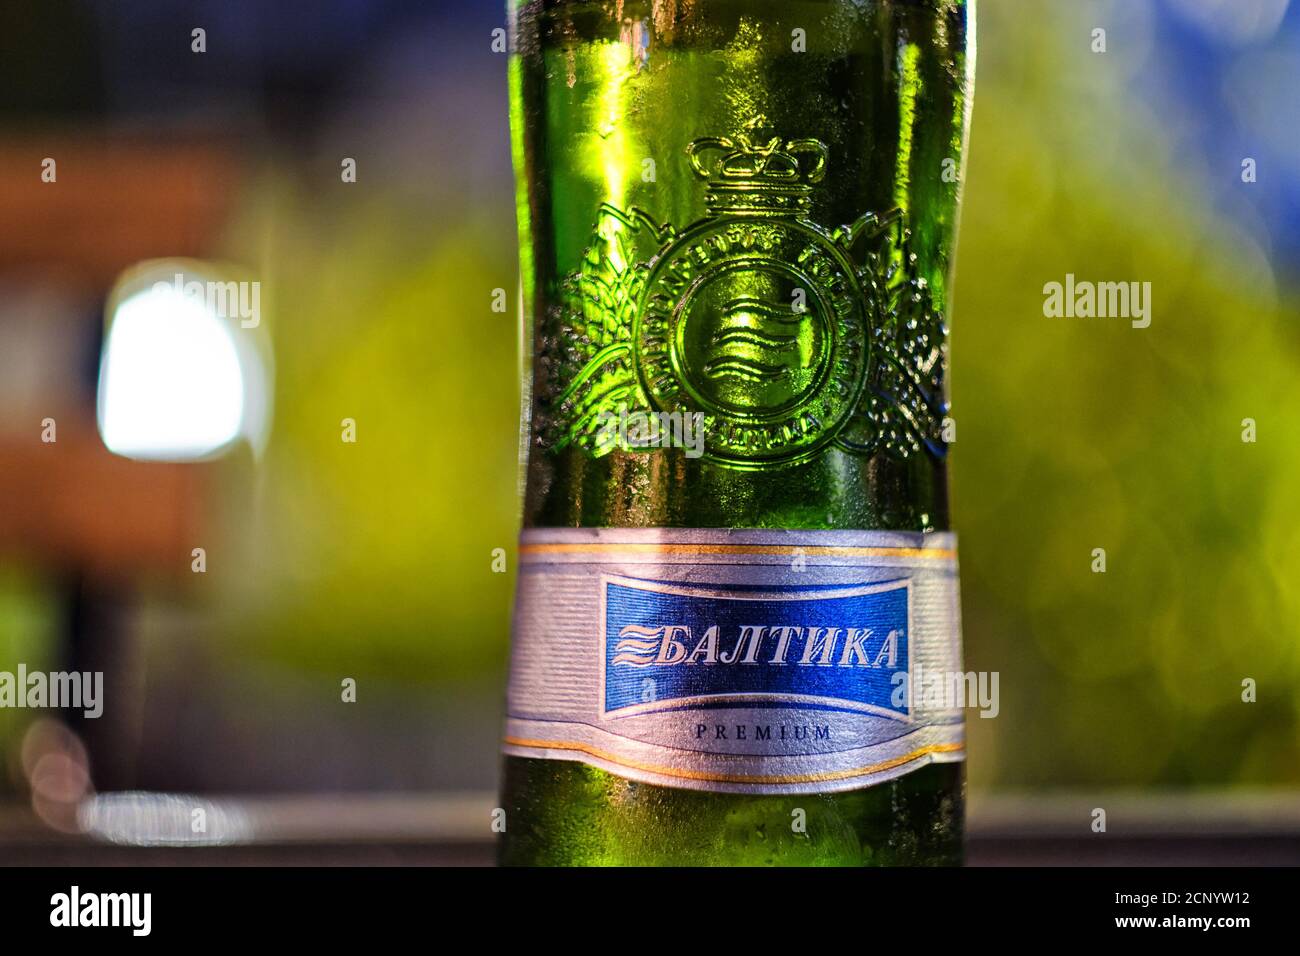 Belgrade / Serbia - September 15, 2020: Bottle of cold Baltika 7 Premium Russian beer served in a bar in Belgrade, Serbia Stock Photo